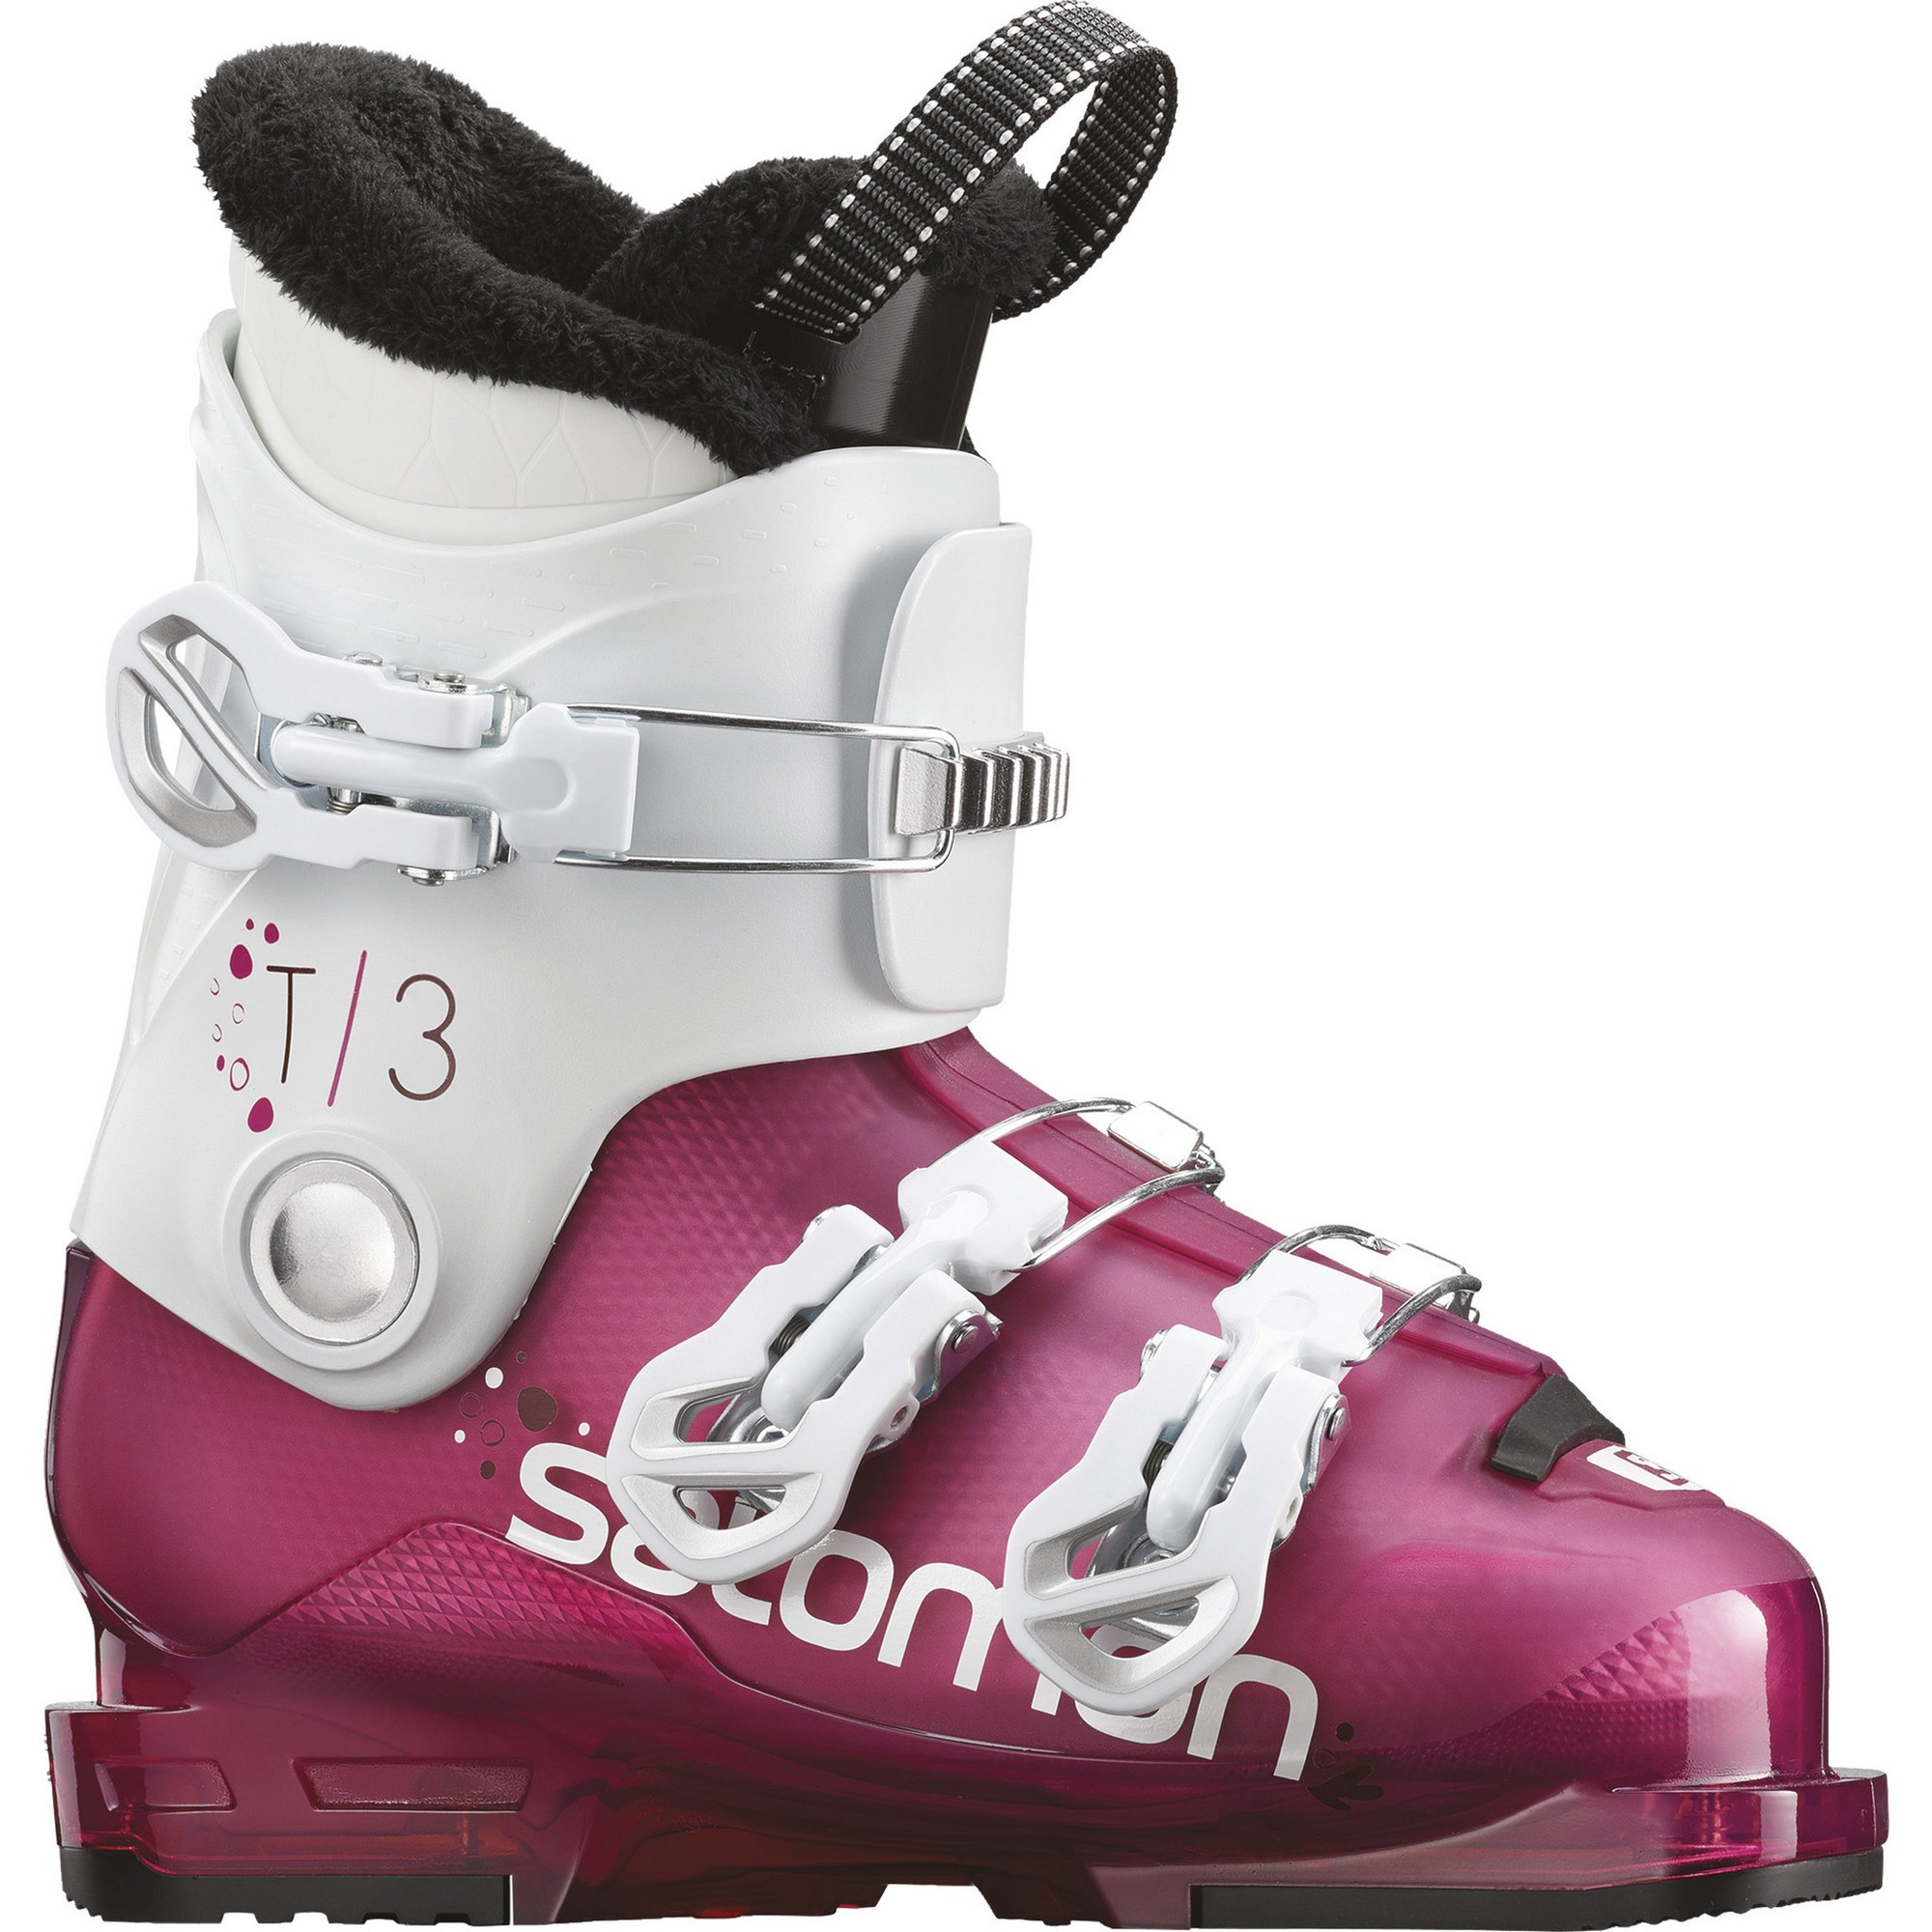 Salomon T3 RT skischoenen junior girly pink